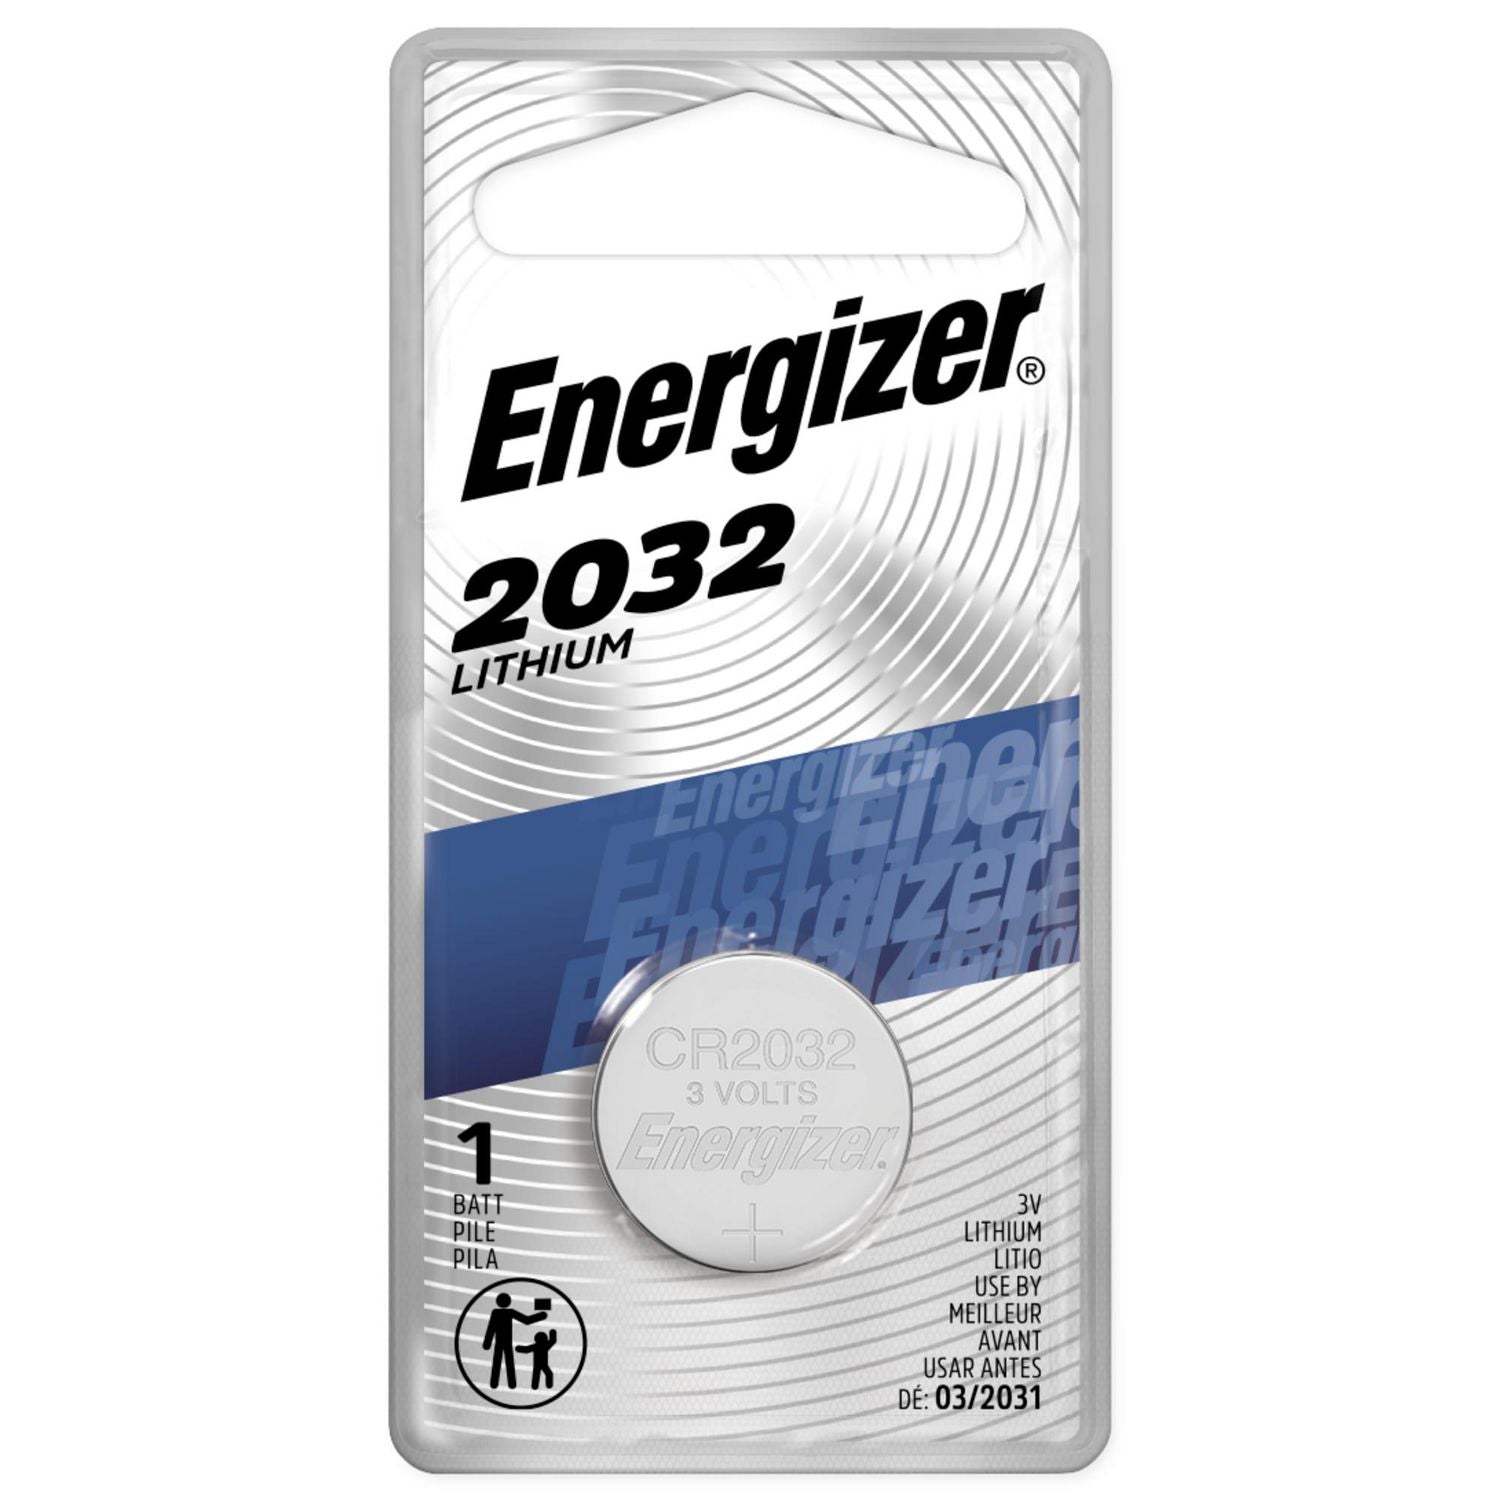 Energizer Lithium 2032 3V Battery